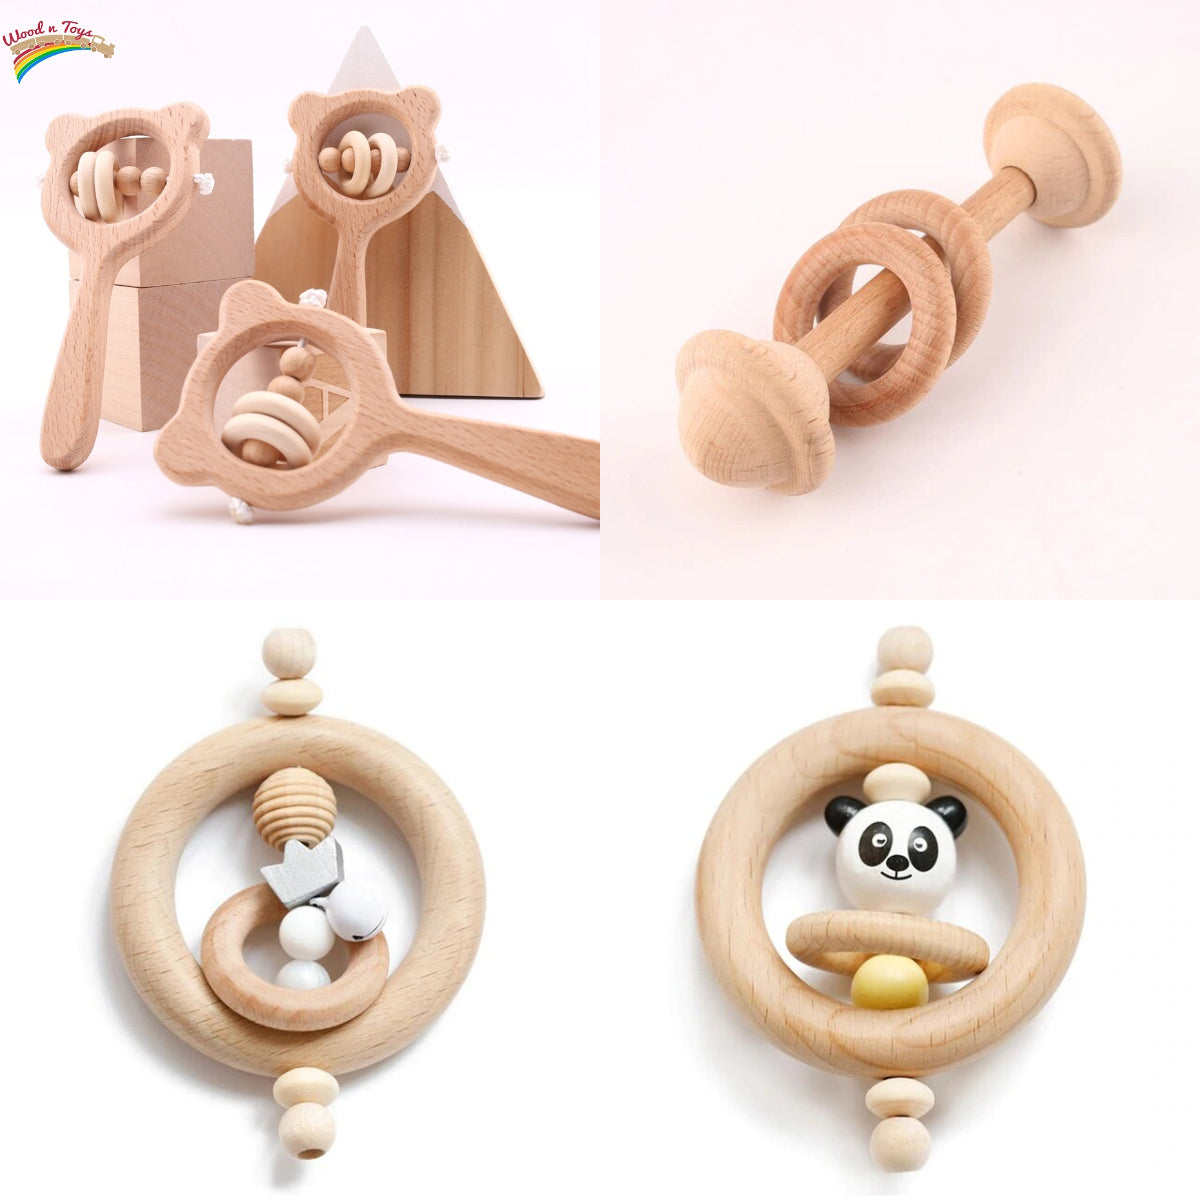 Wooden Baby Rattle - Baby Essentials